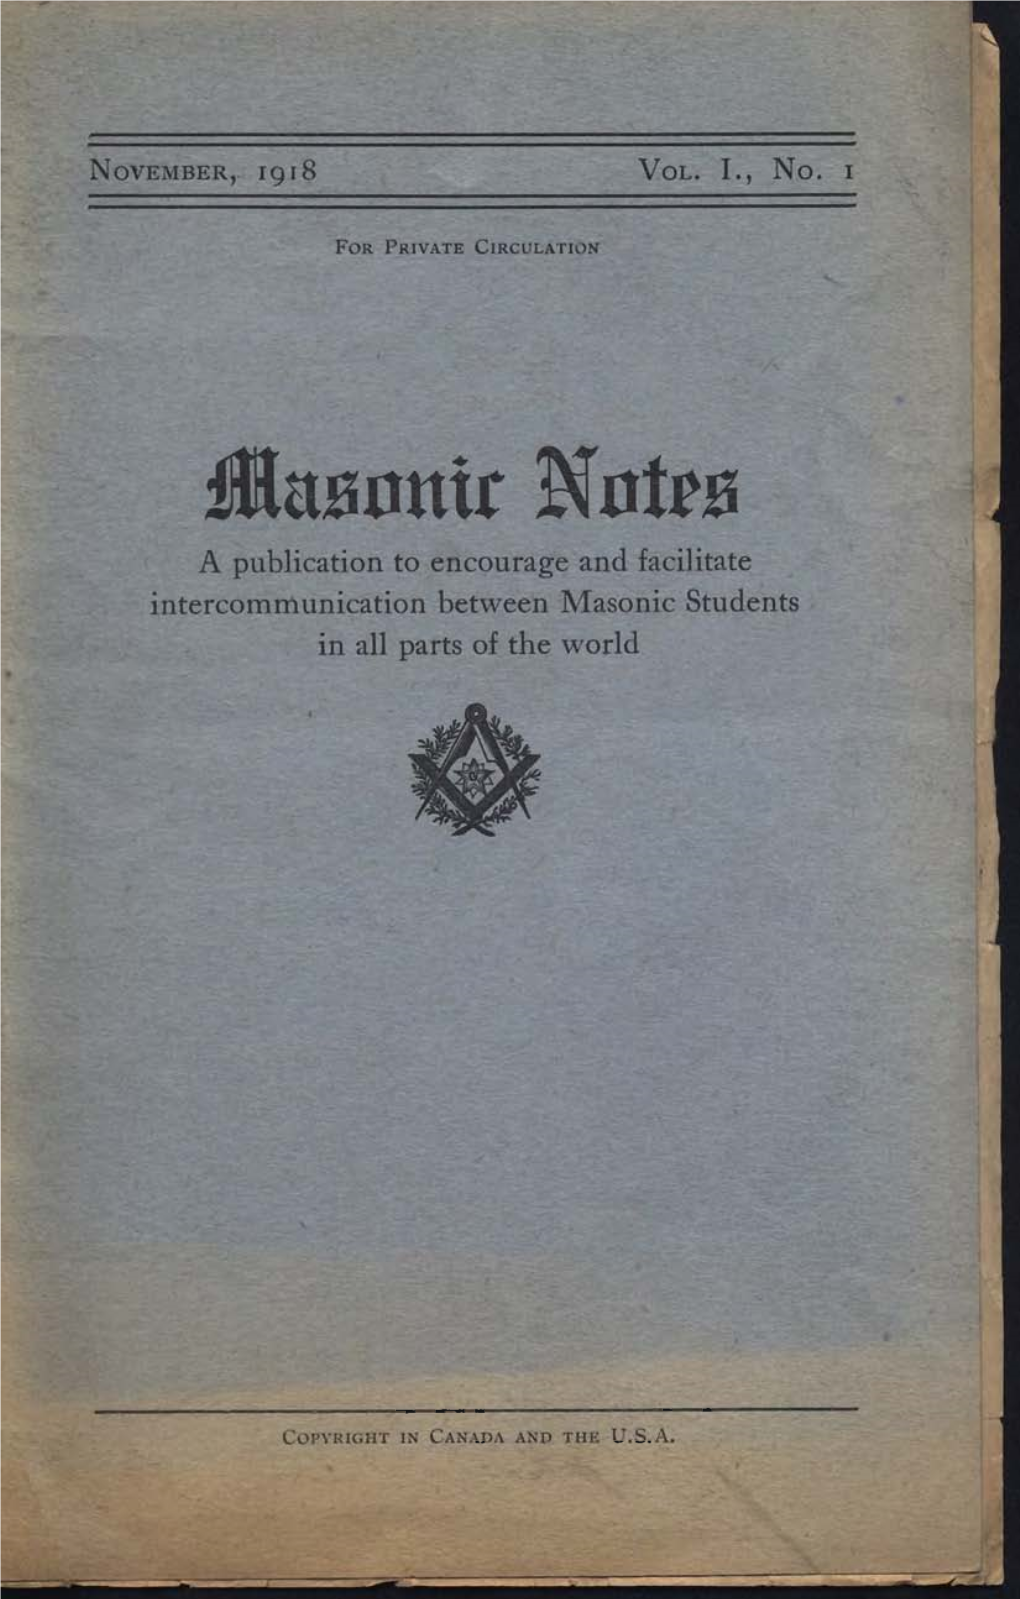 Masonic Notes Vol. 1, No. 1 – 1918